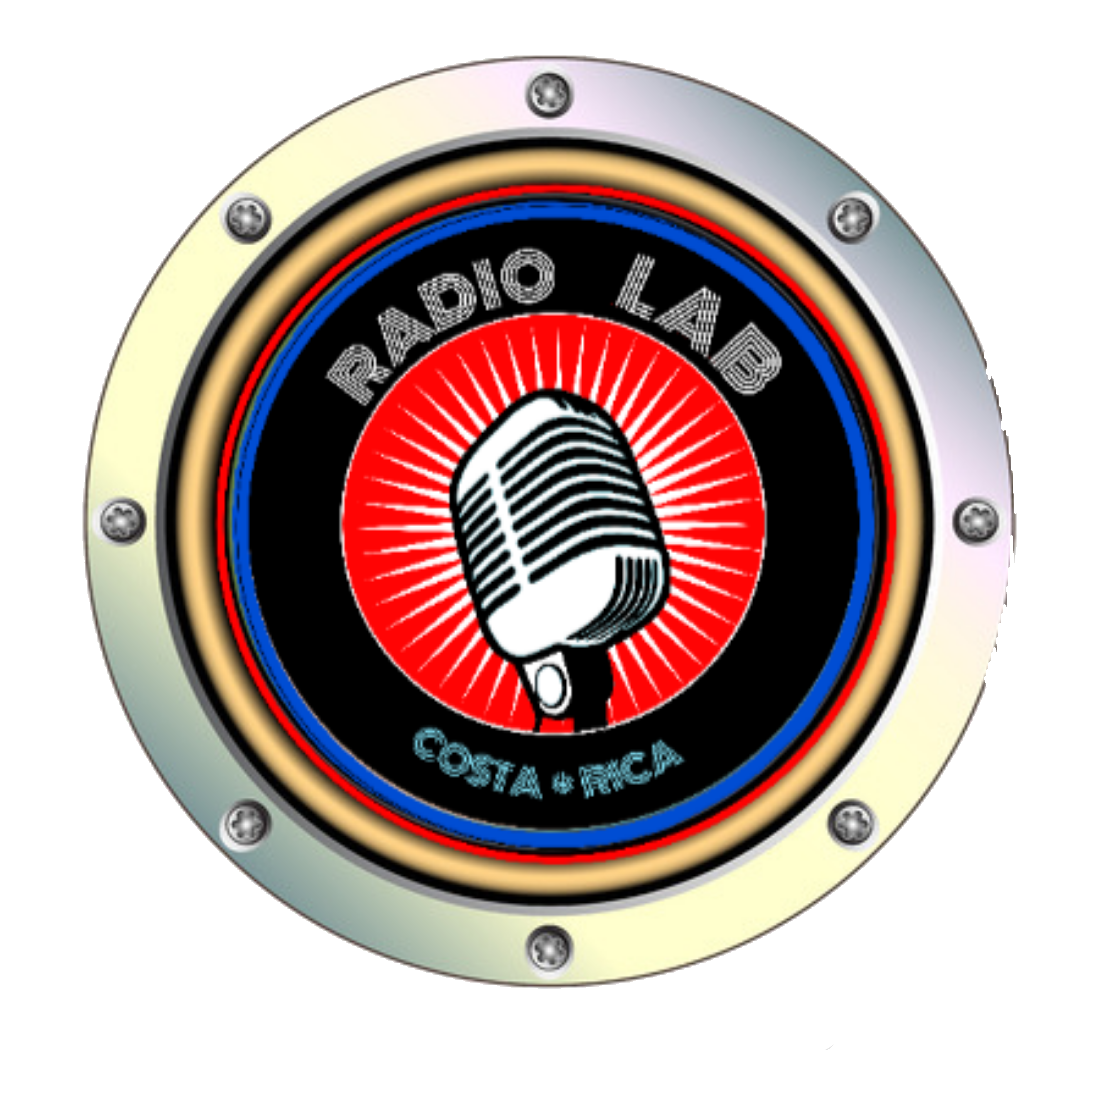 RadioLAB du Costa Rica